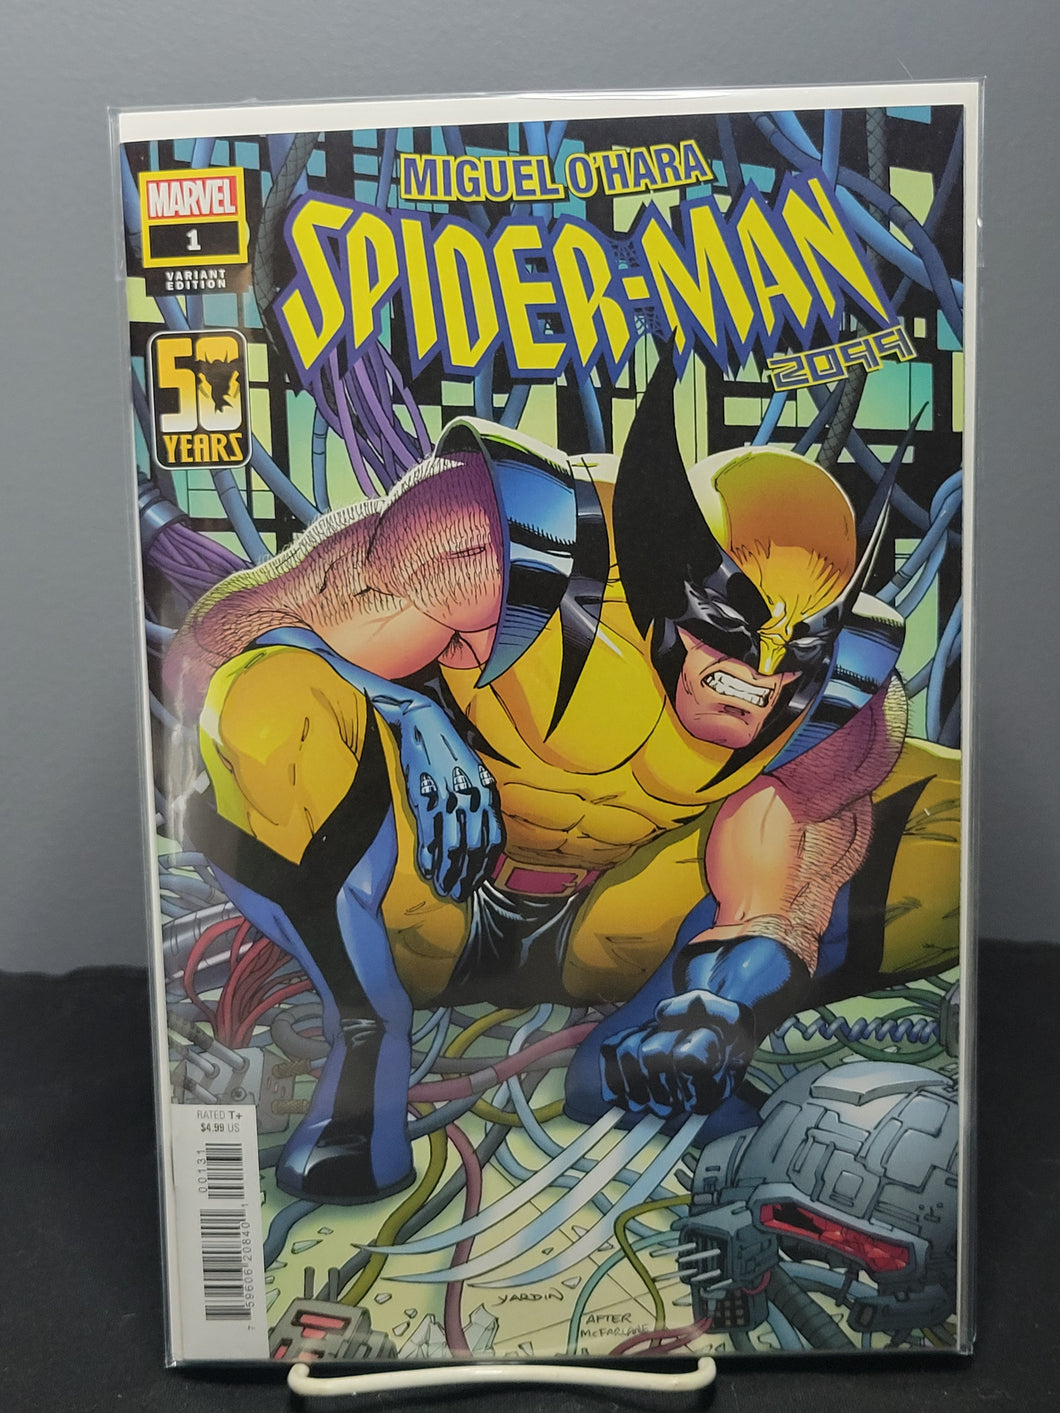 Miguel O'Hara Spider-Man 2099 #1 Wolverine Variant